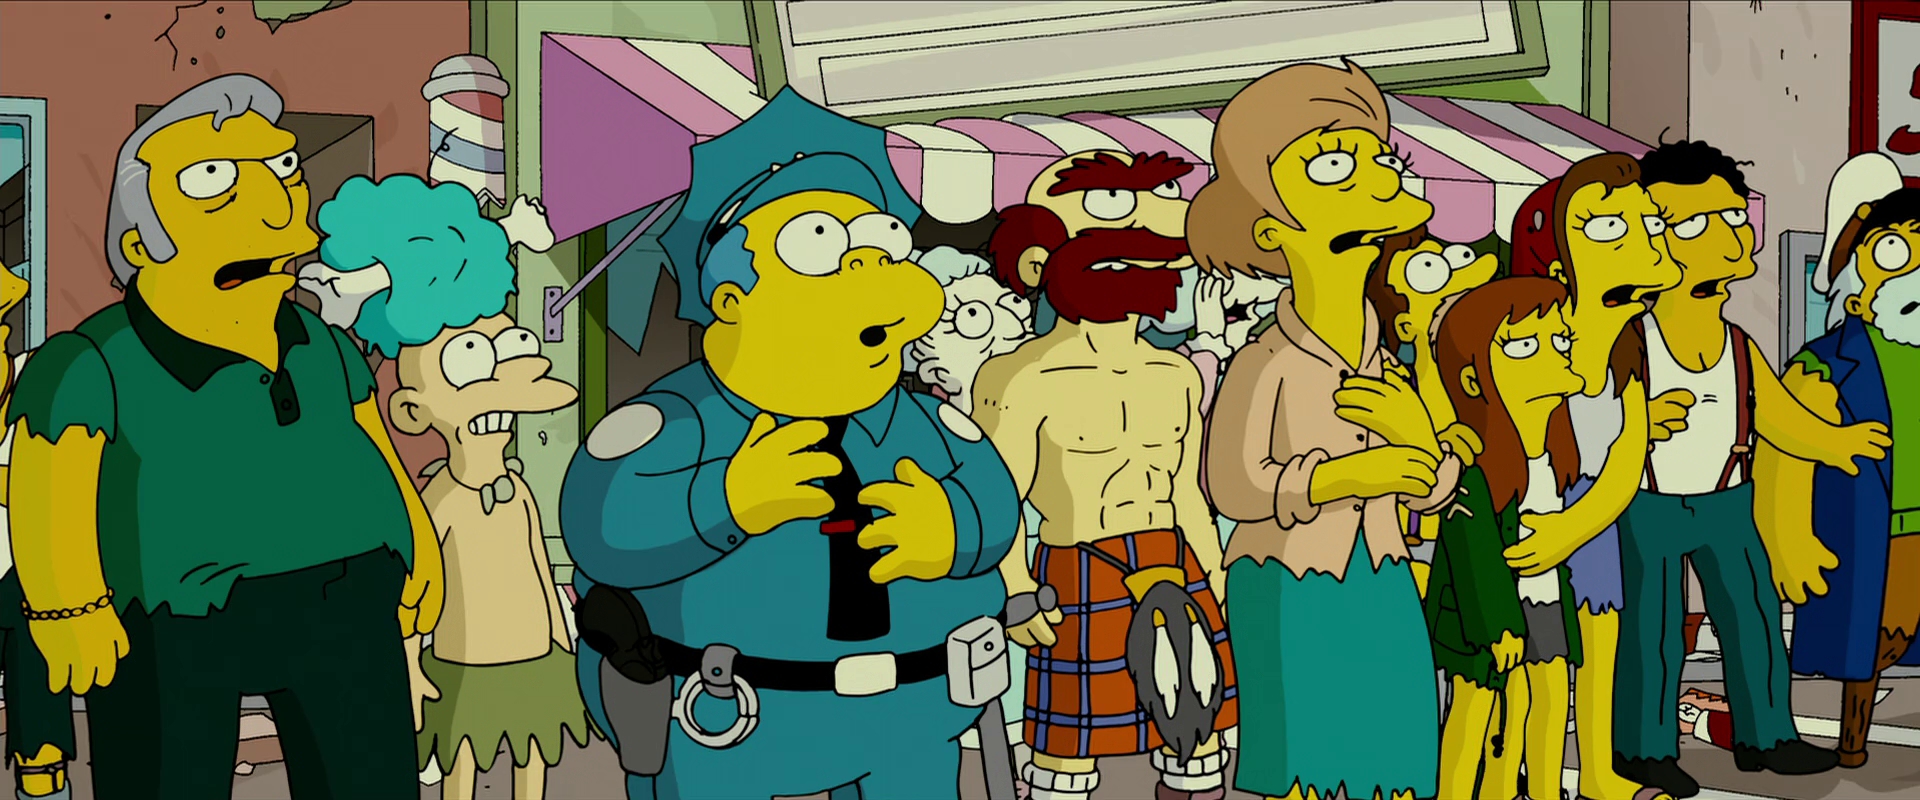 The Simpsons Movie full